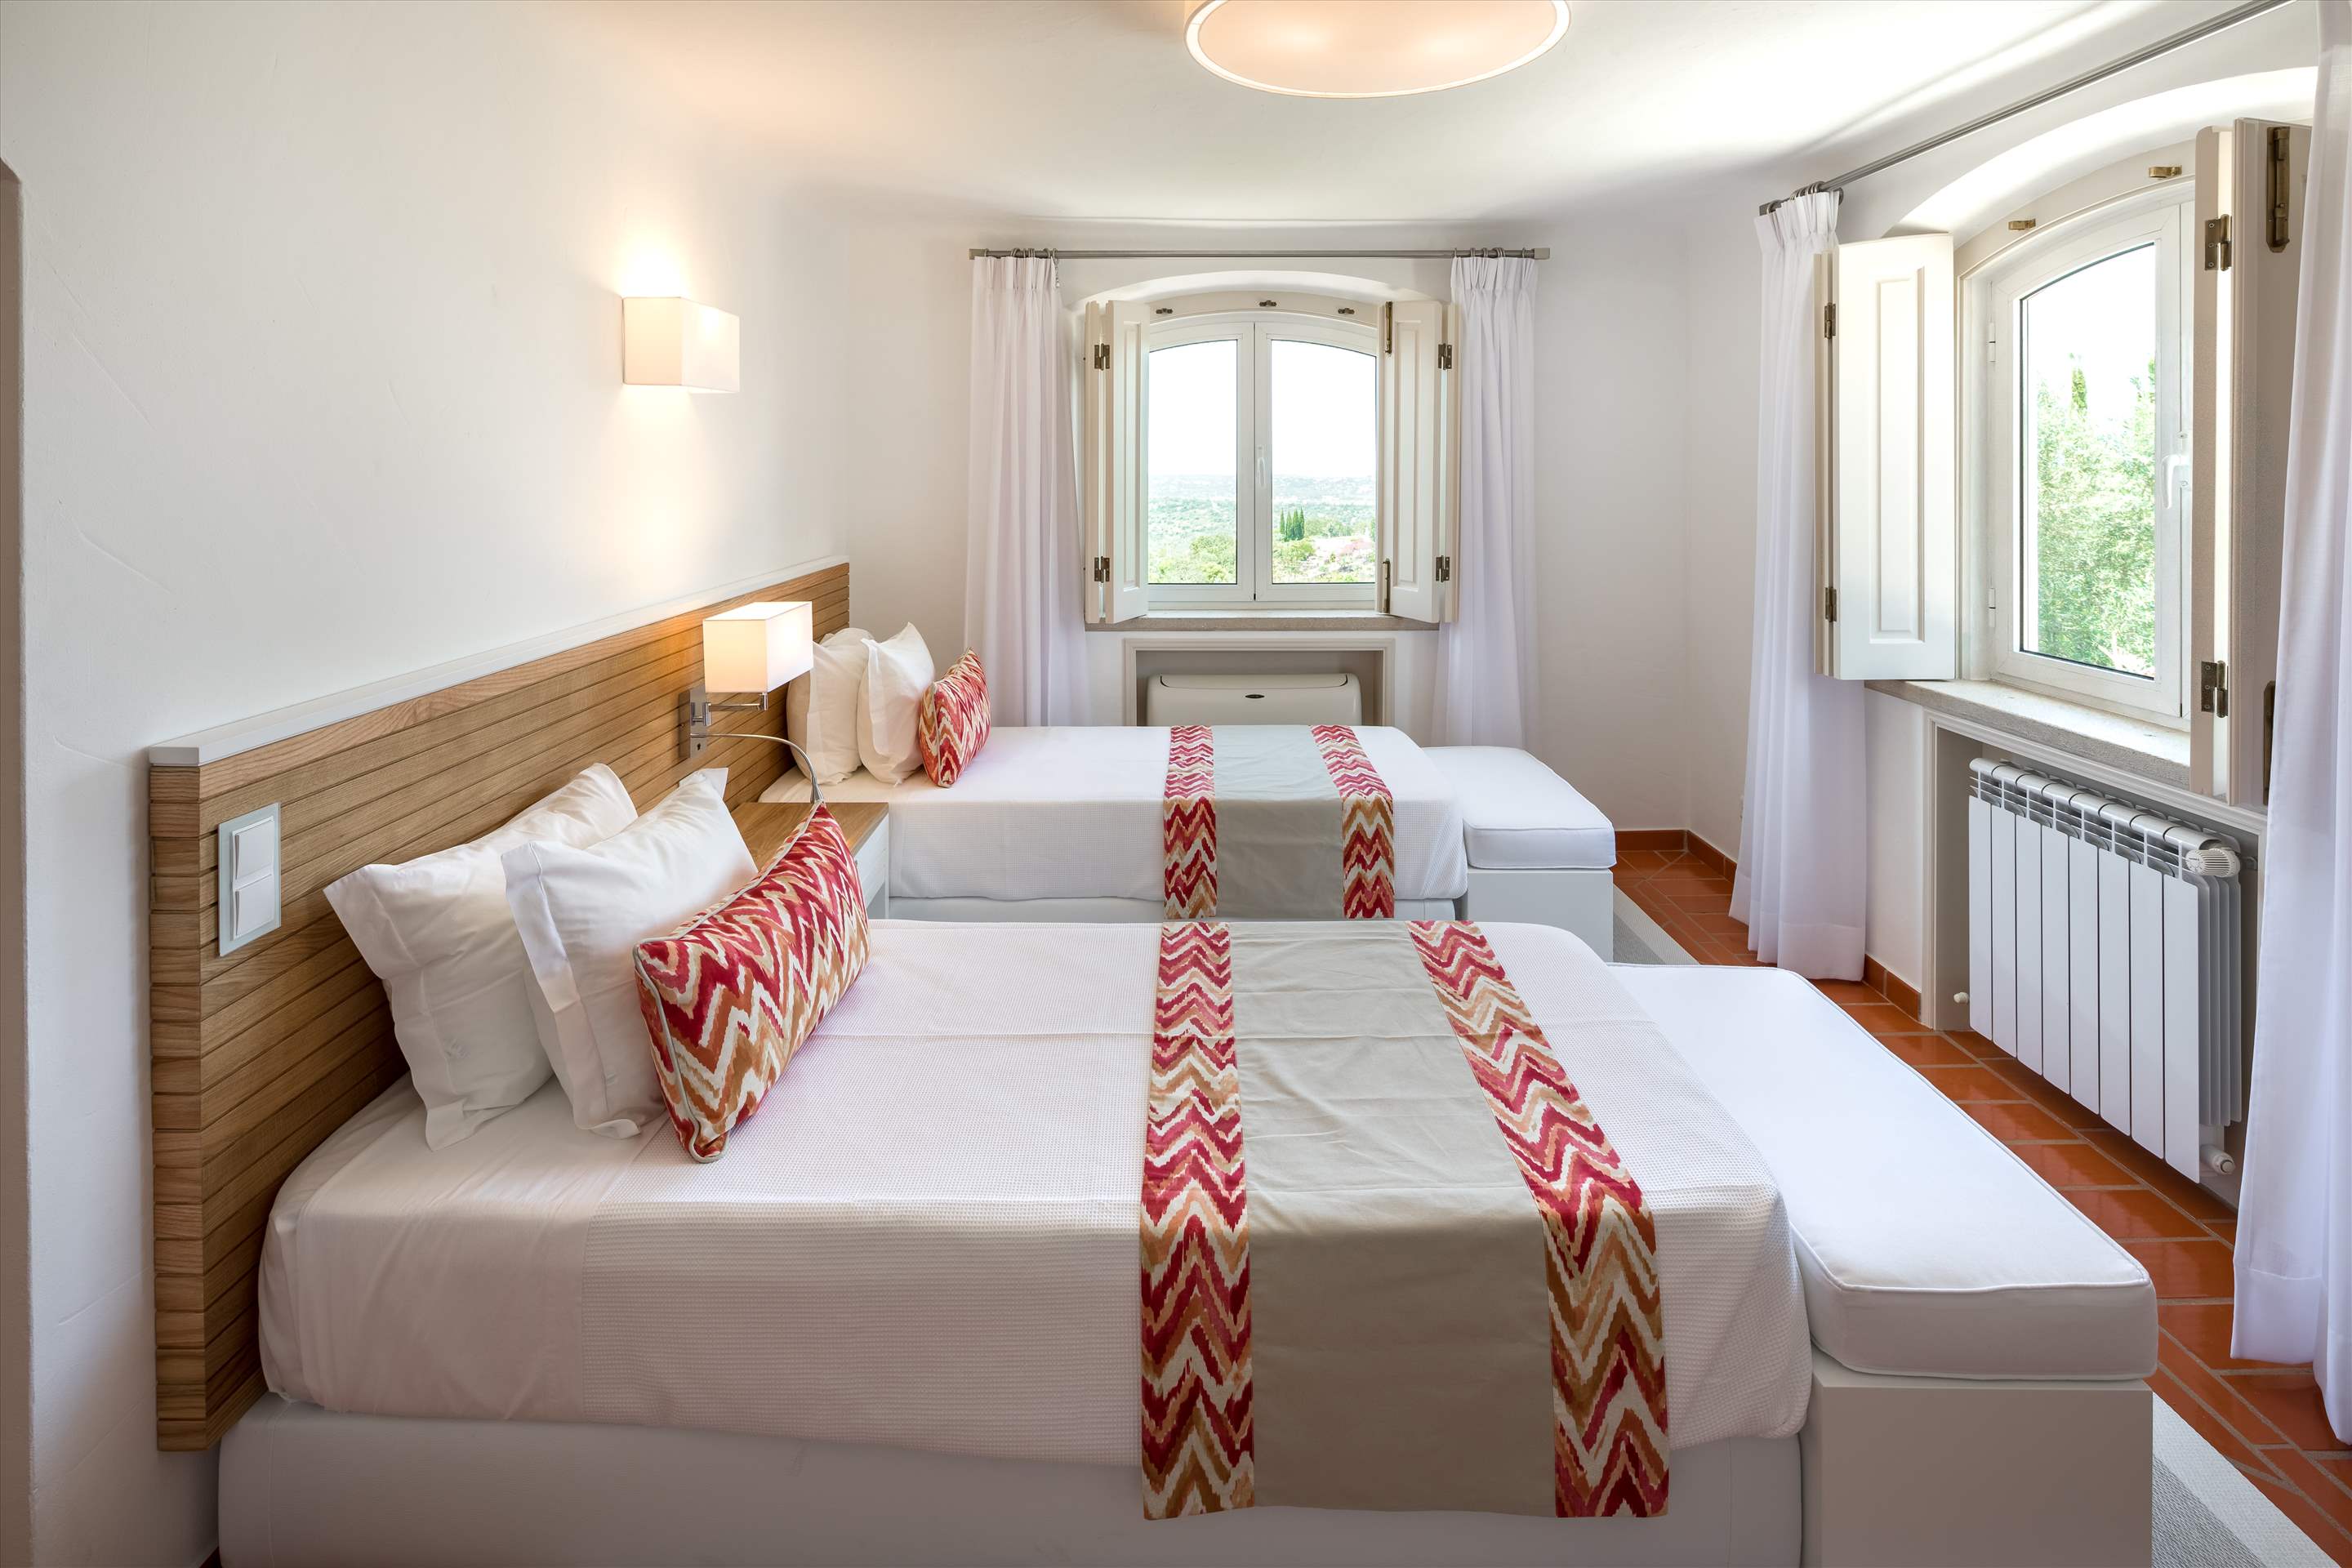 Casa da Montanha, 11-12 persons, 7 bedroom villa in Vilamoura Area, Algarve Photo #25